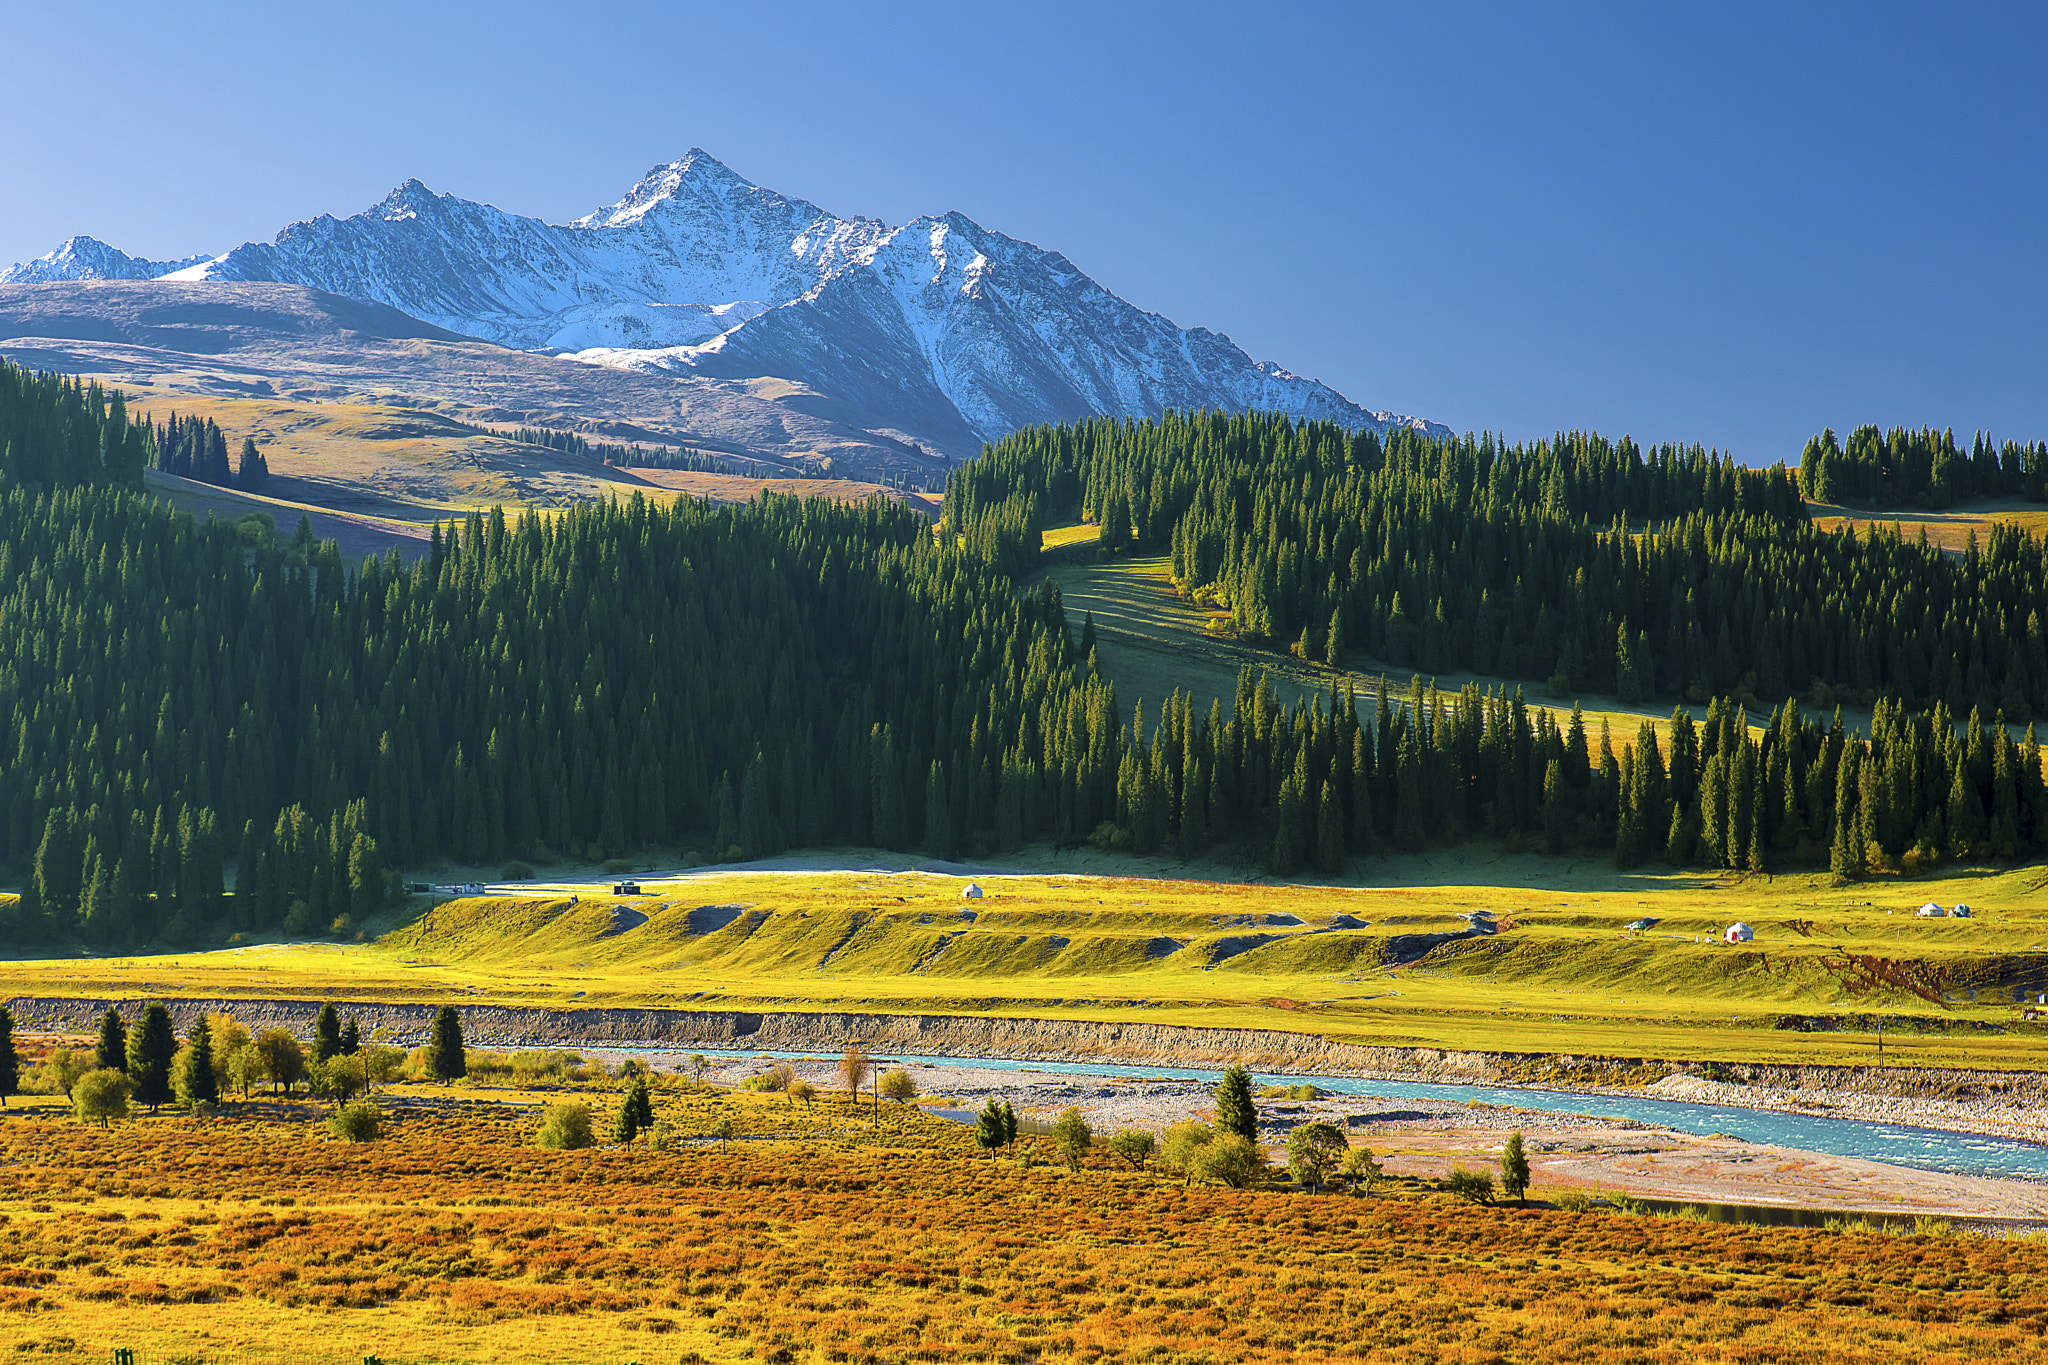 Xinjiang, Tangbra Grasslands, Tianshan Mt, Du-Ku Hwy, 独库公路, 唐布拉草原, 秋色